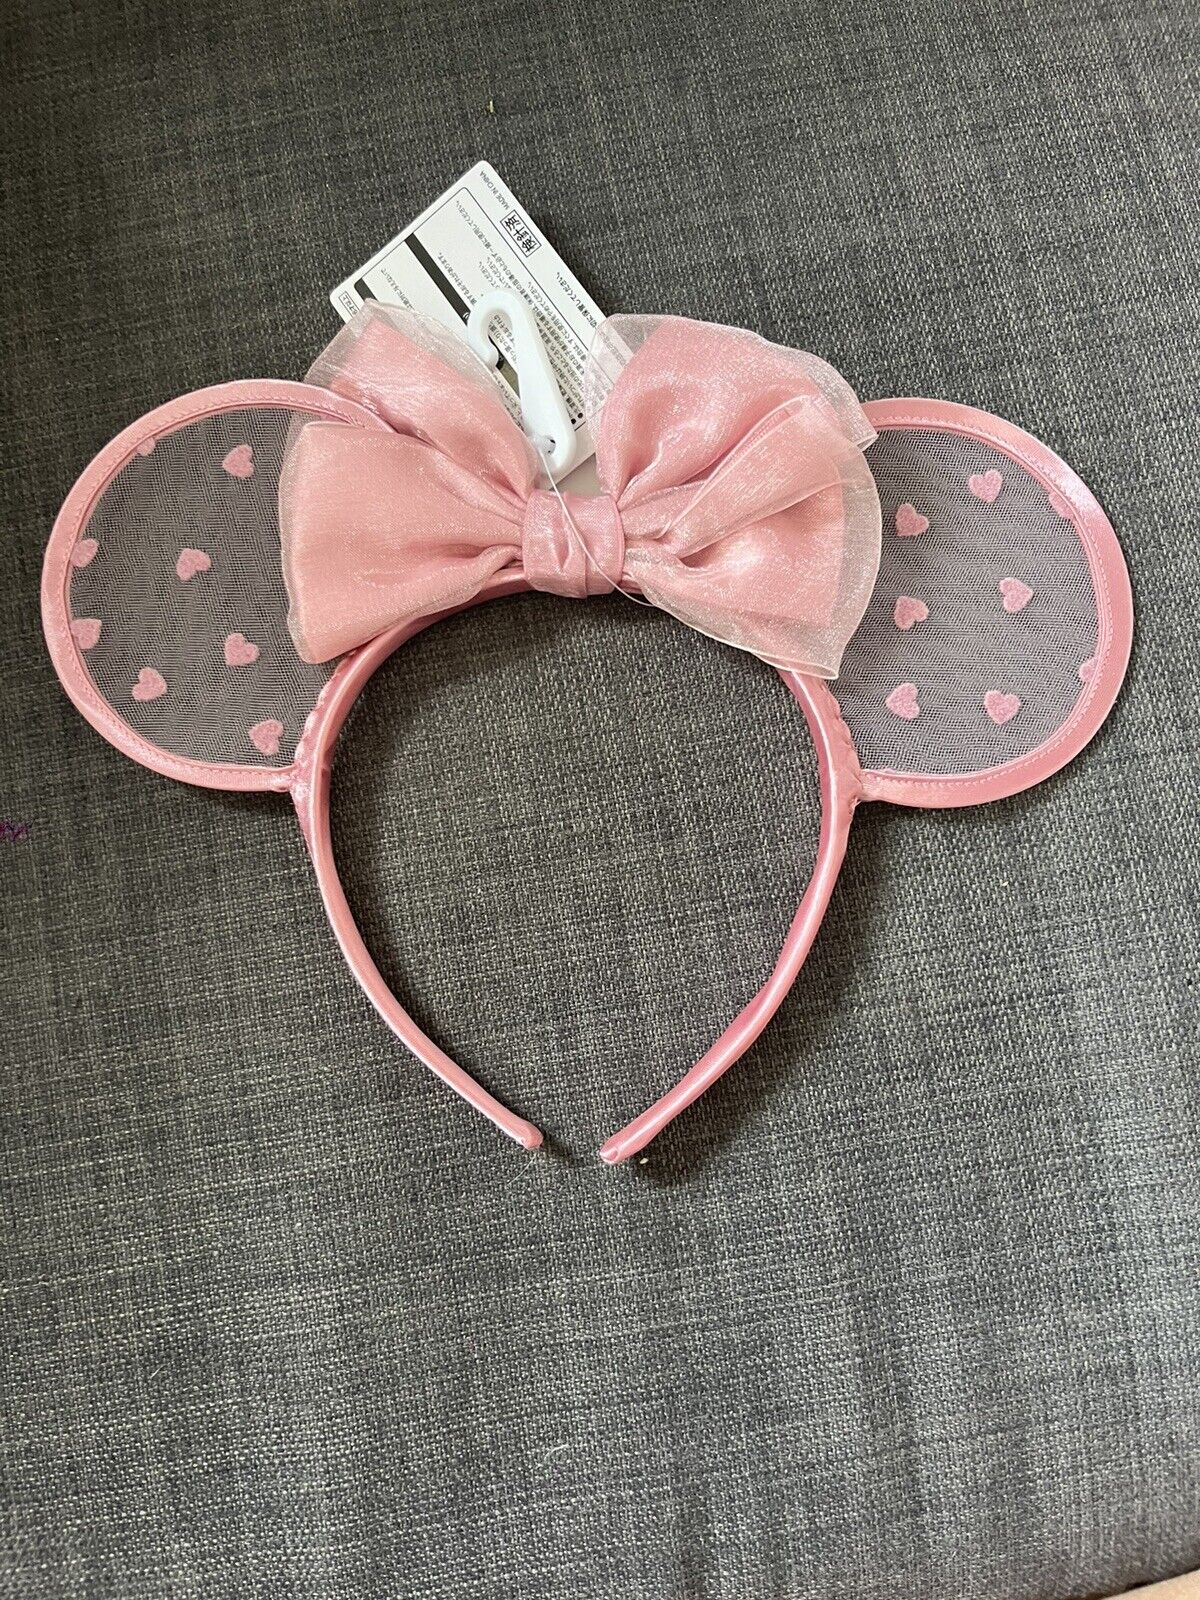 Japan Tokyo Disney Resort Ears HeadBand Hat Lace polka dots Pink Heart Minnie